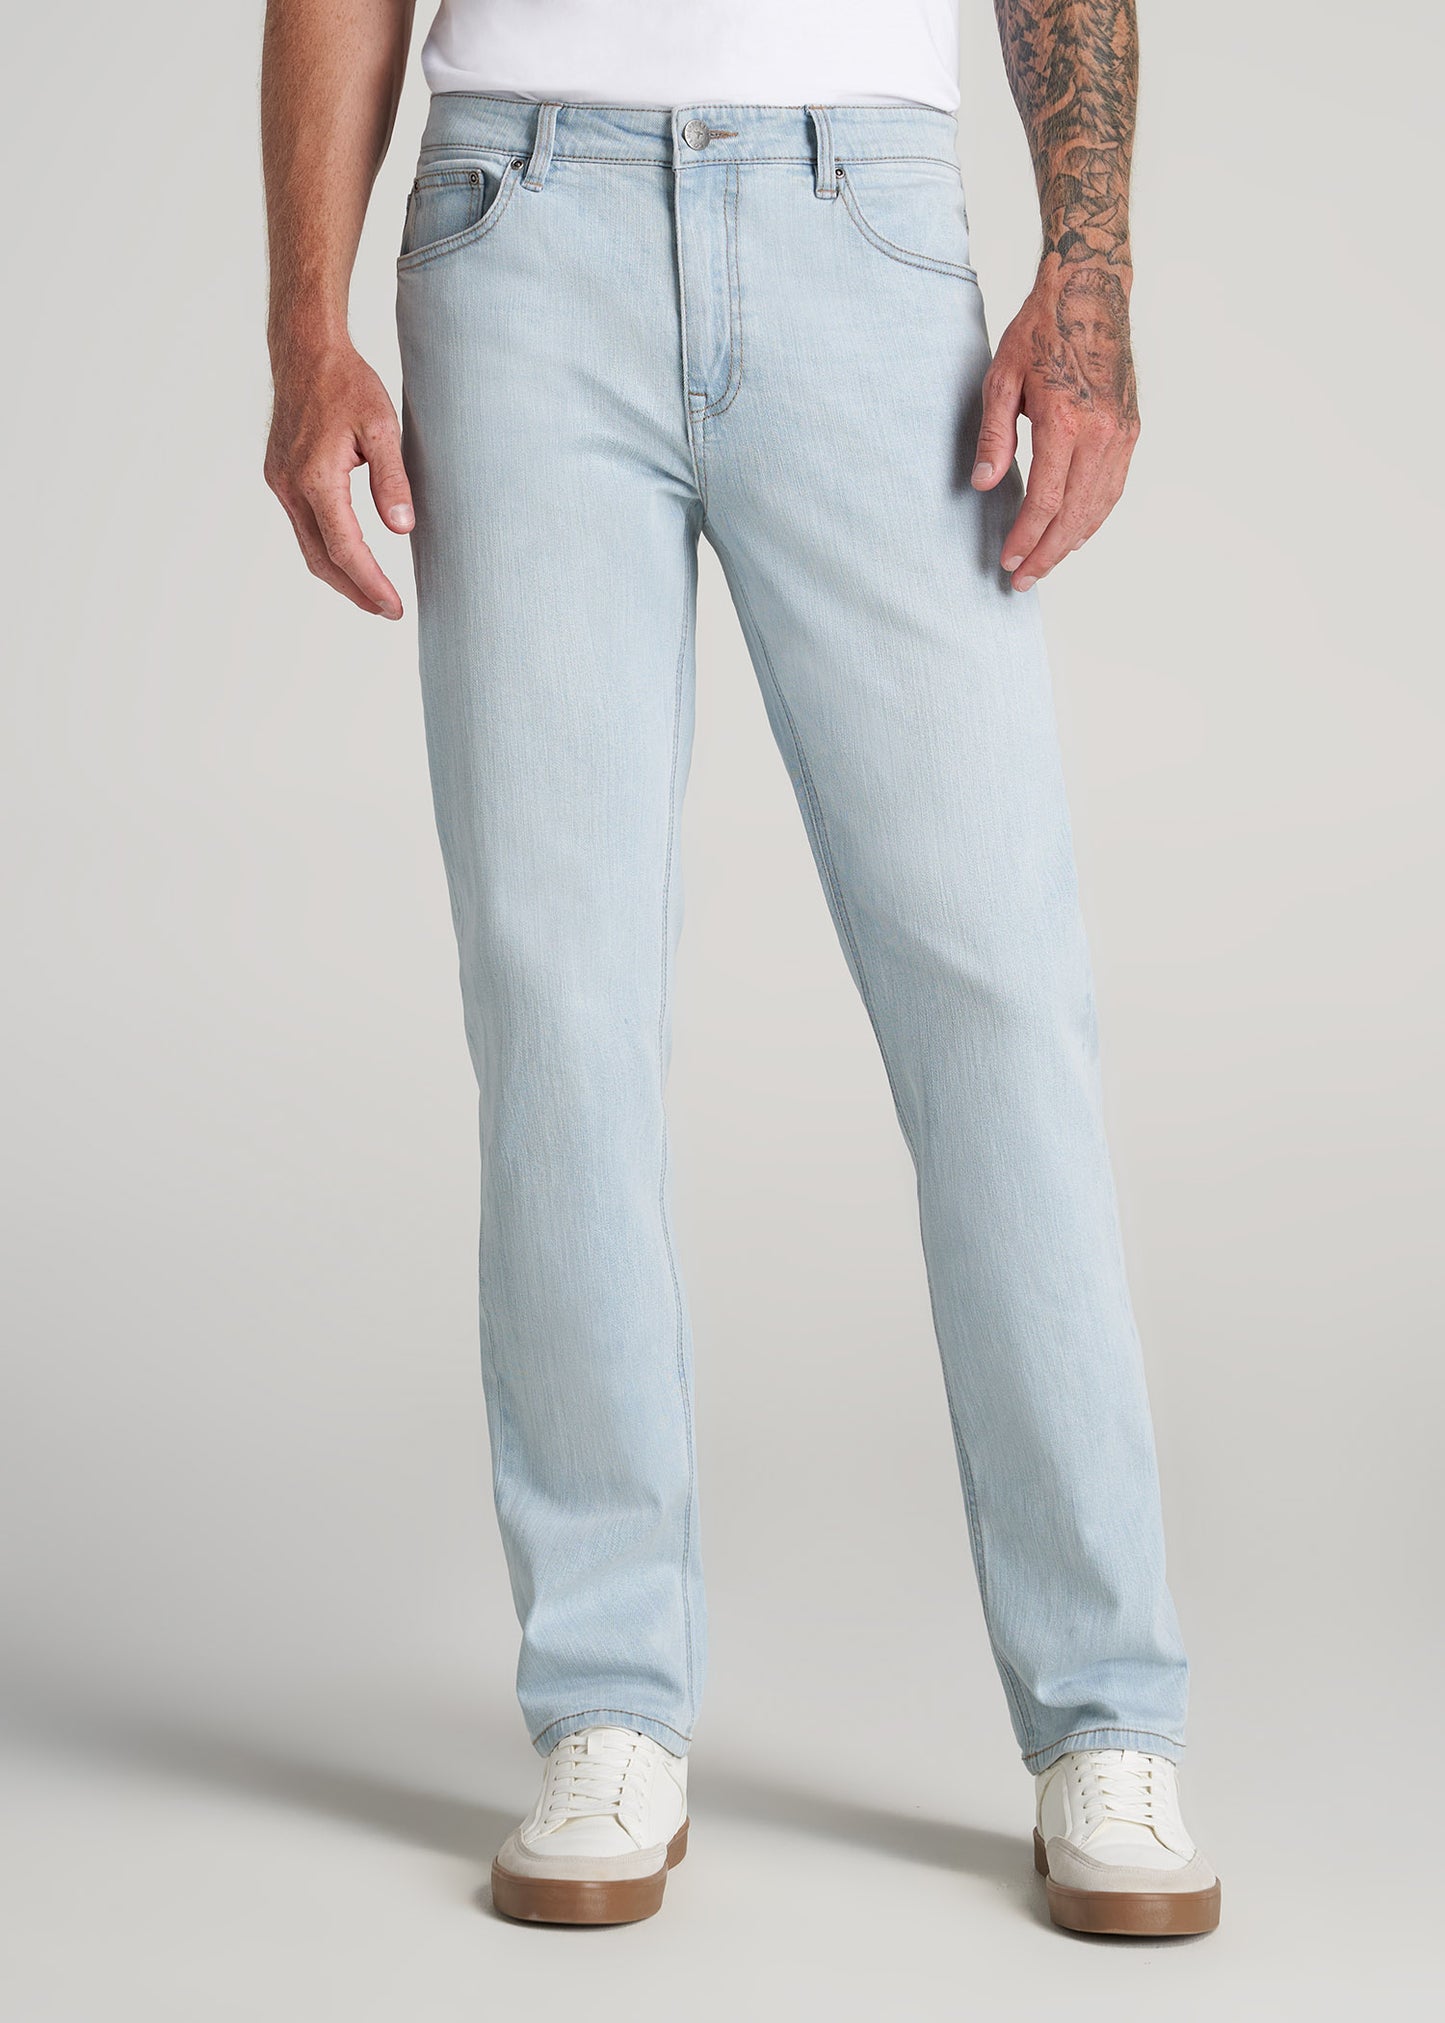 Retro Blue J1 Jeans, American Tall